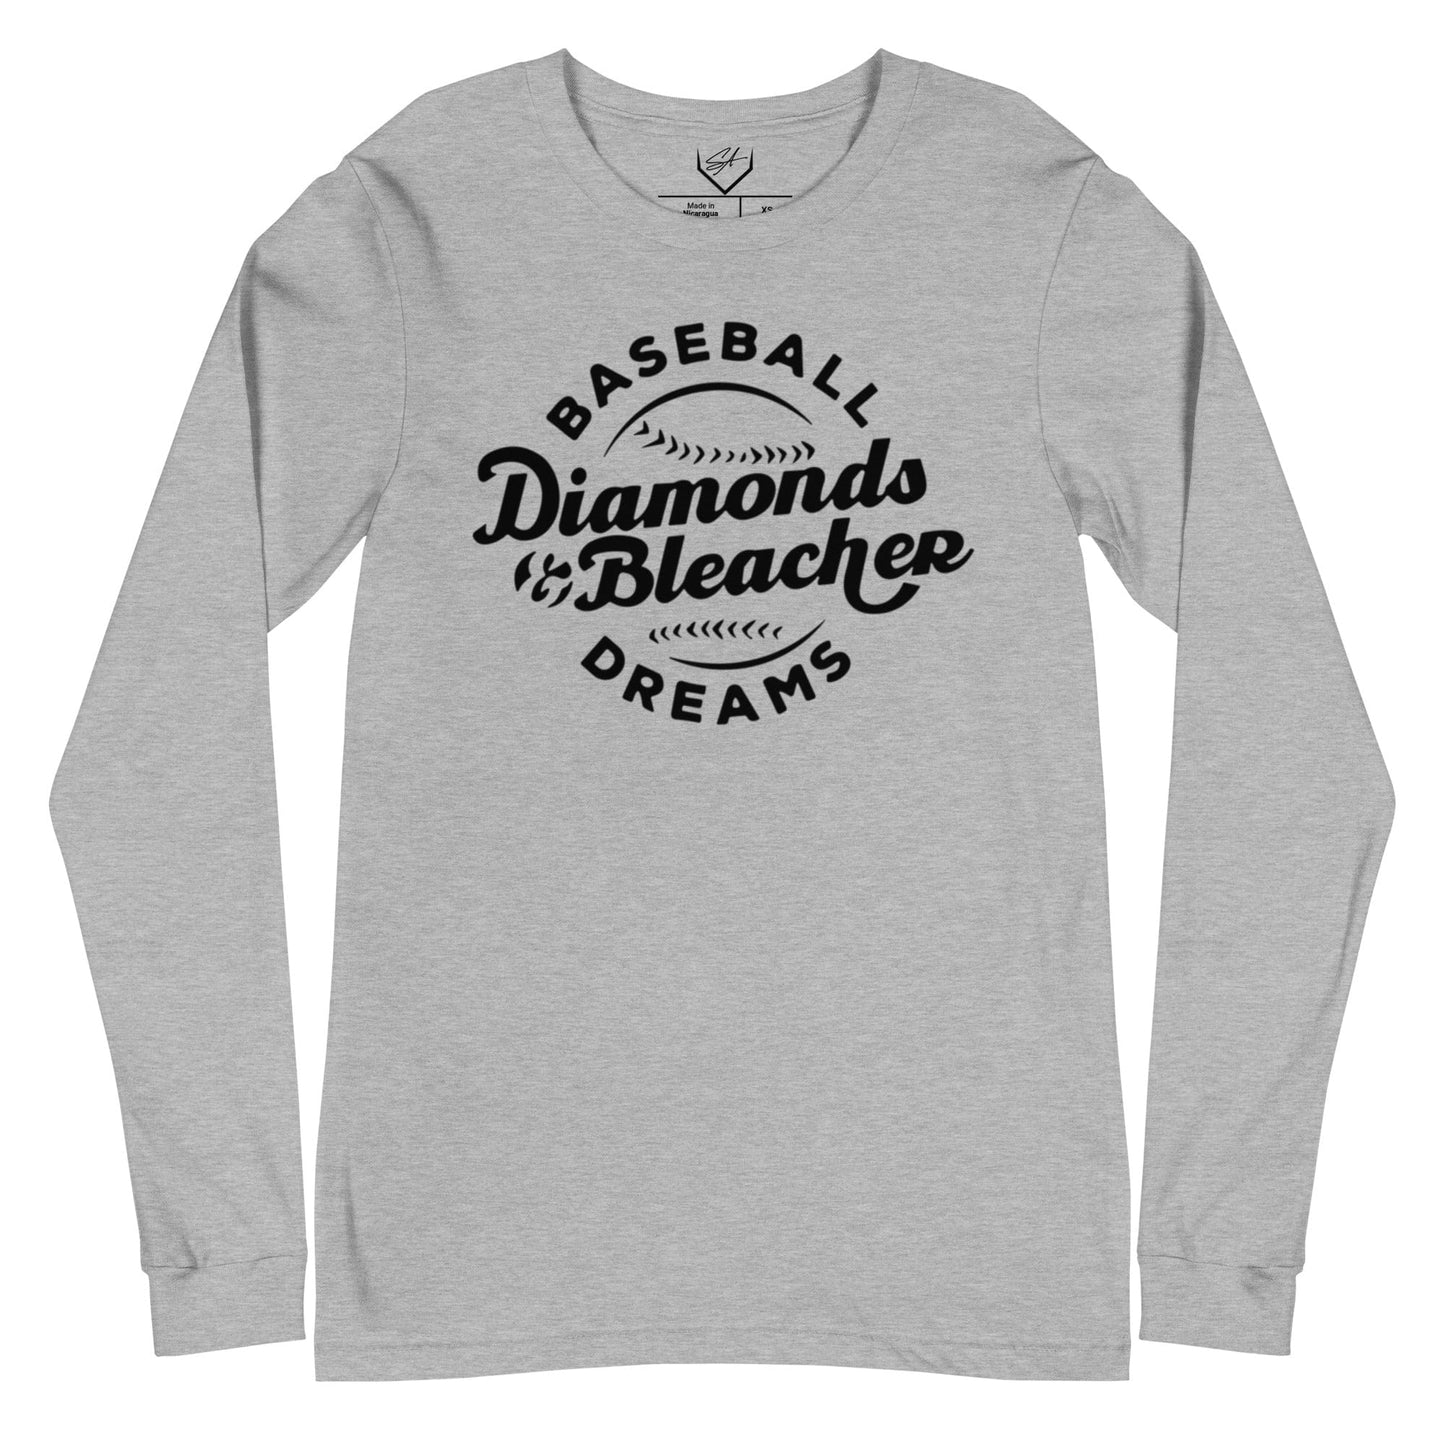 Baseball Diamonds And Bleacher Dreams - Adult Long Sleeve